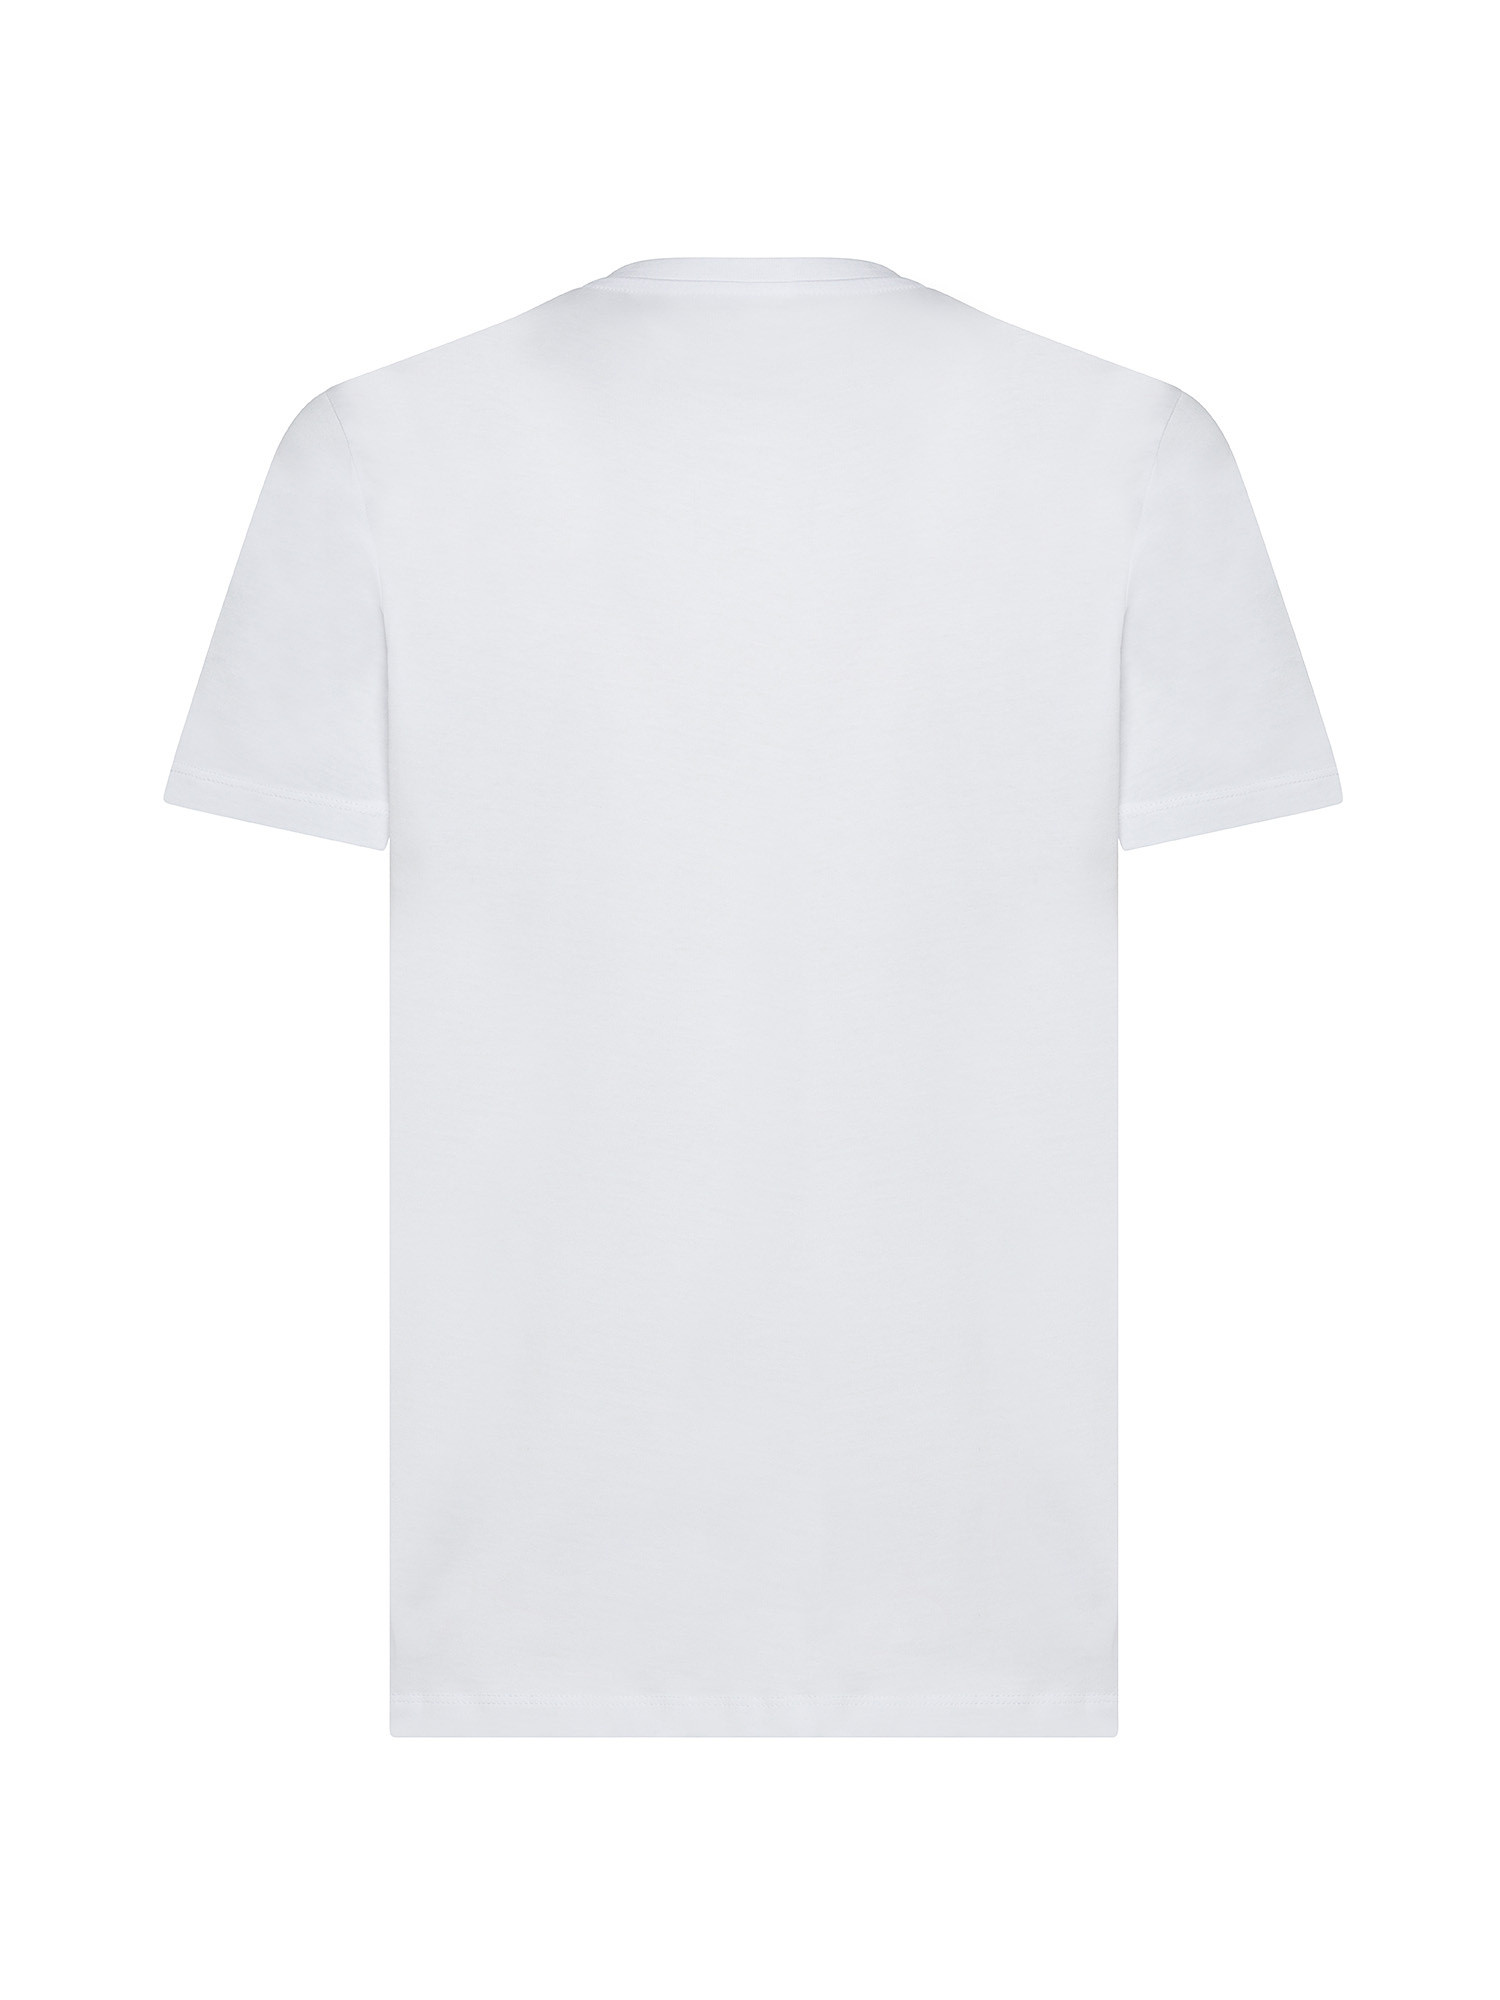 Jack & Jones - Cotton T-shirt, White, large image number 1